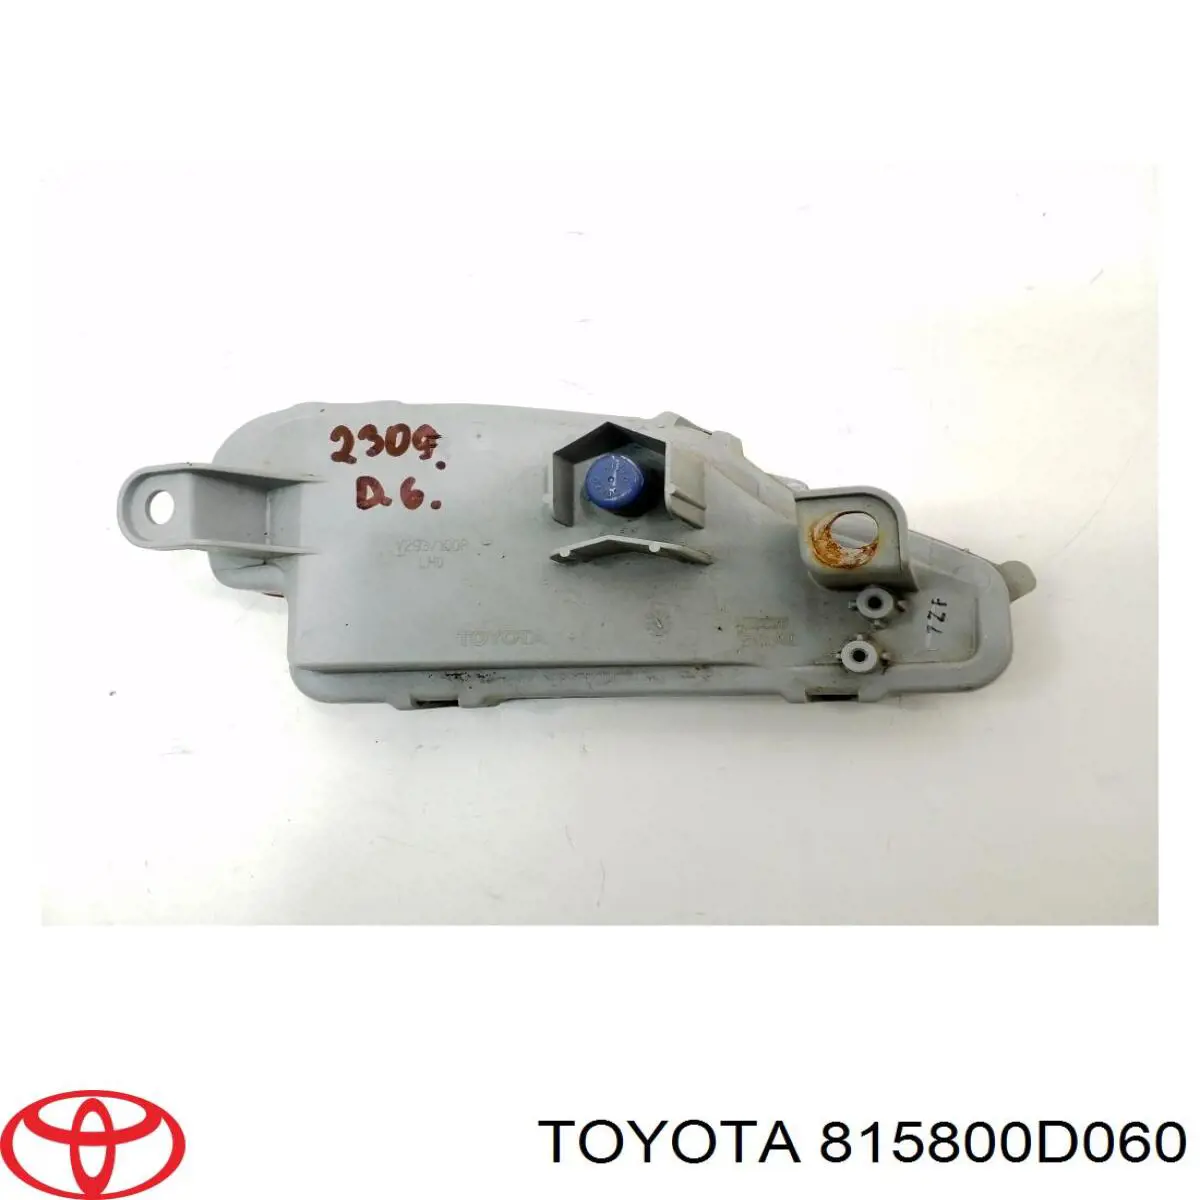 815800D060 Toyota reflector, parachoques trasero, derecho